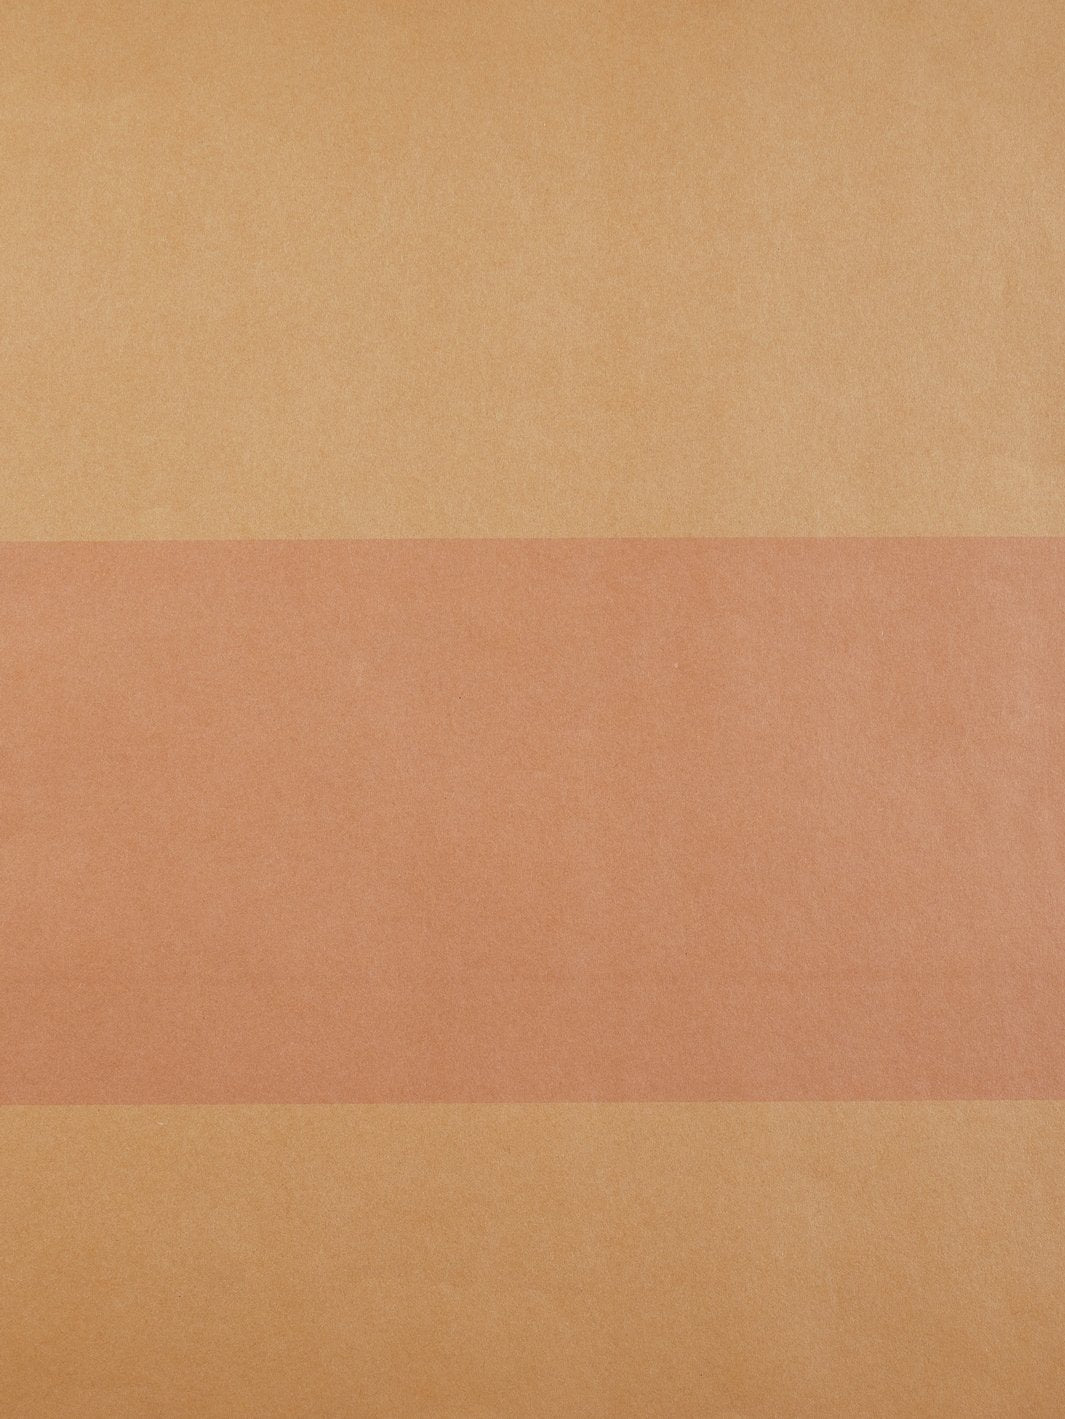 'Wide Stripe' Kraft' Wallpaper by Wallshoppe - Blush